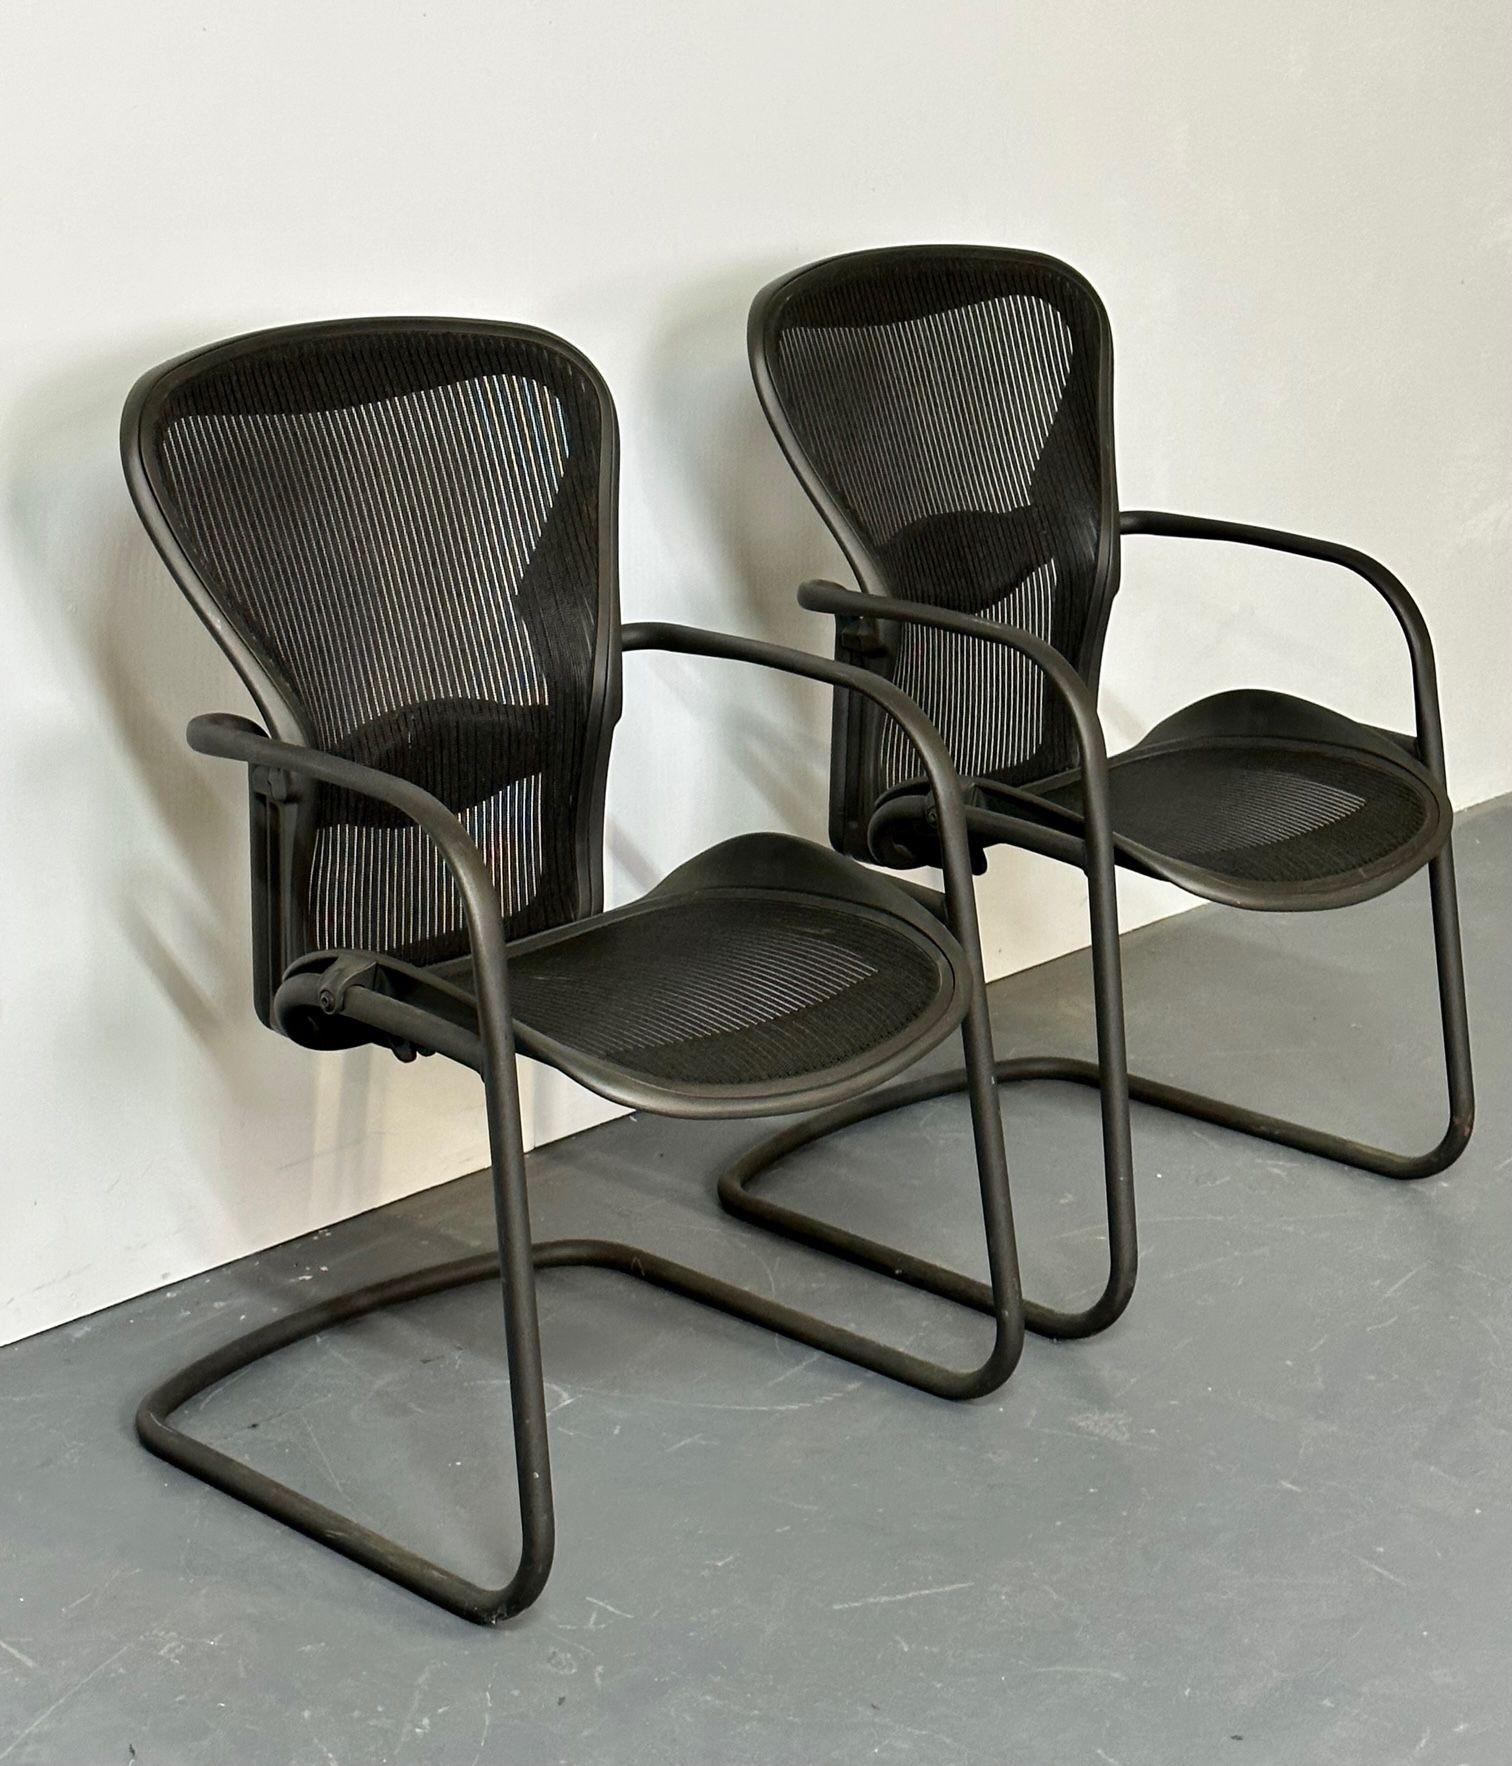 American Pair of Stamped Herman Miller Mid-Century Modern Desk / Office Chairs, Aluminum